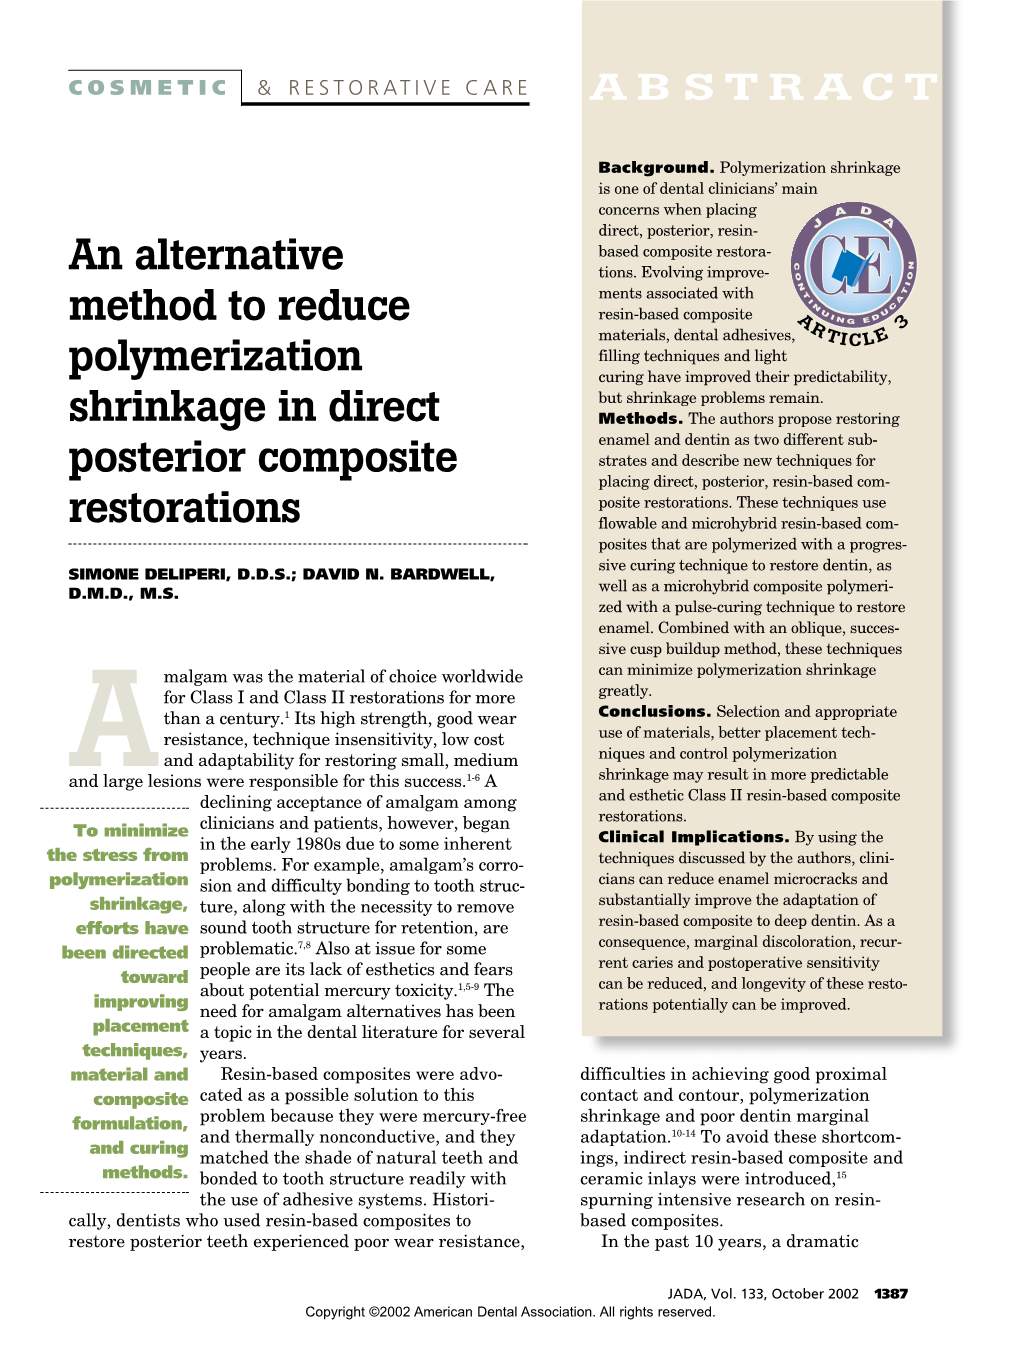 An Alternative Method to Reduce Polymerization Shrinkage in Direct